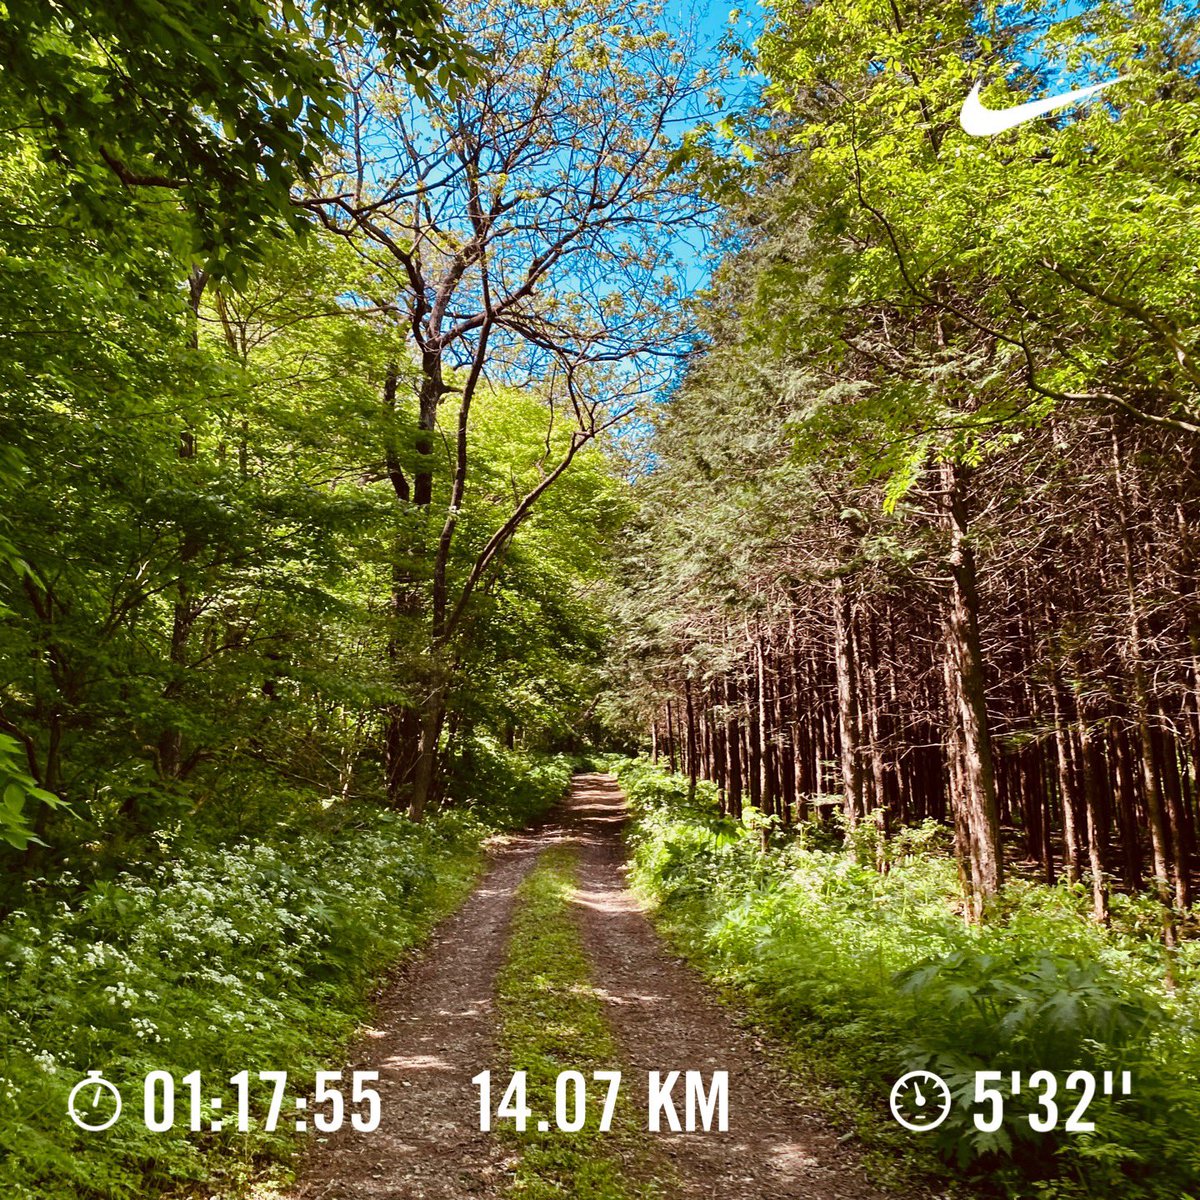 EASY JOG ✔︎
A refreshing run along the forest route

Workout total＝Run →1232 times

#nike #running #pegasus40 #japan #nikerunner #easyjog #走れる事に感謝 #garmin